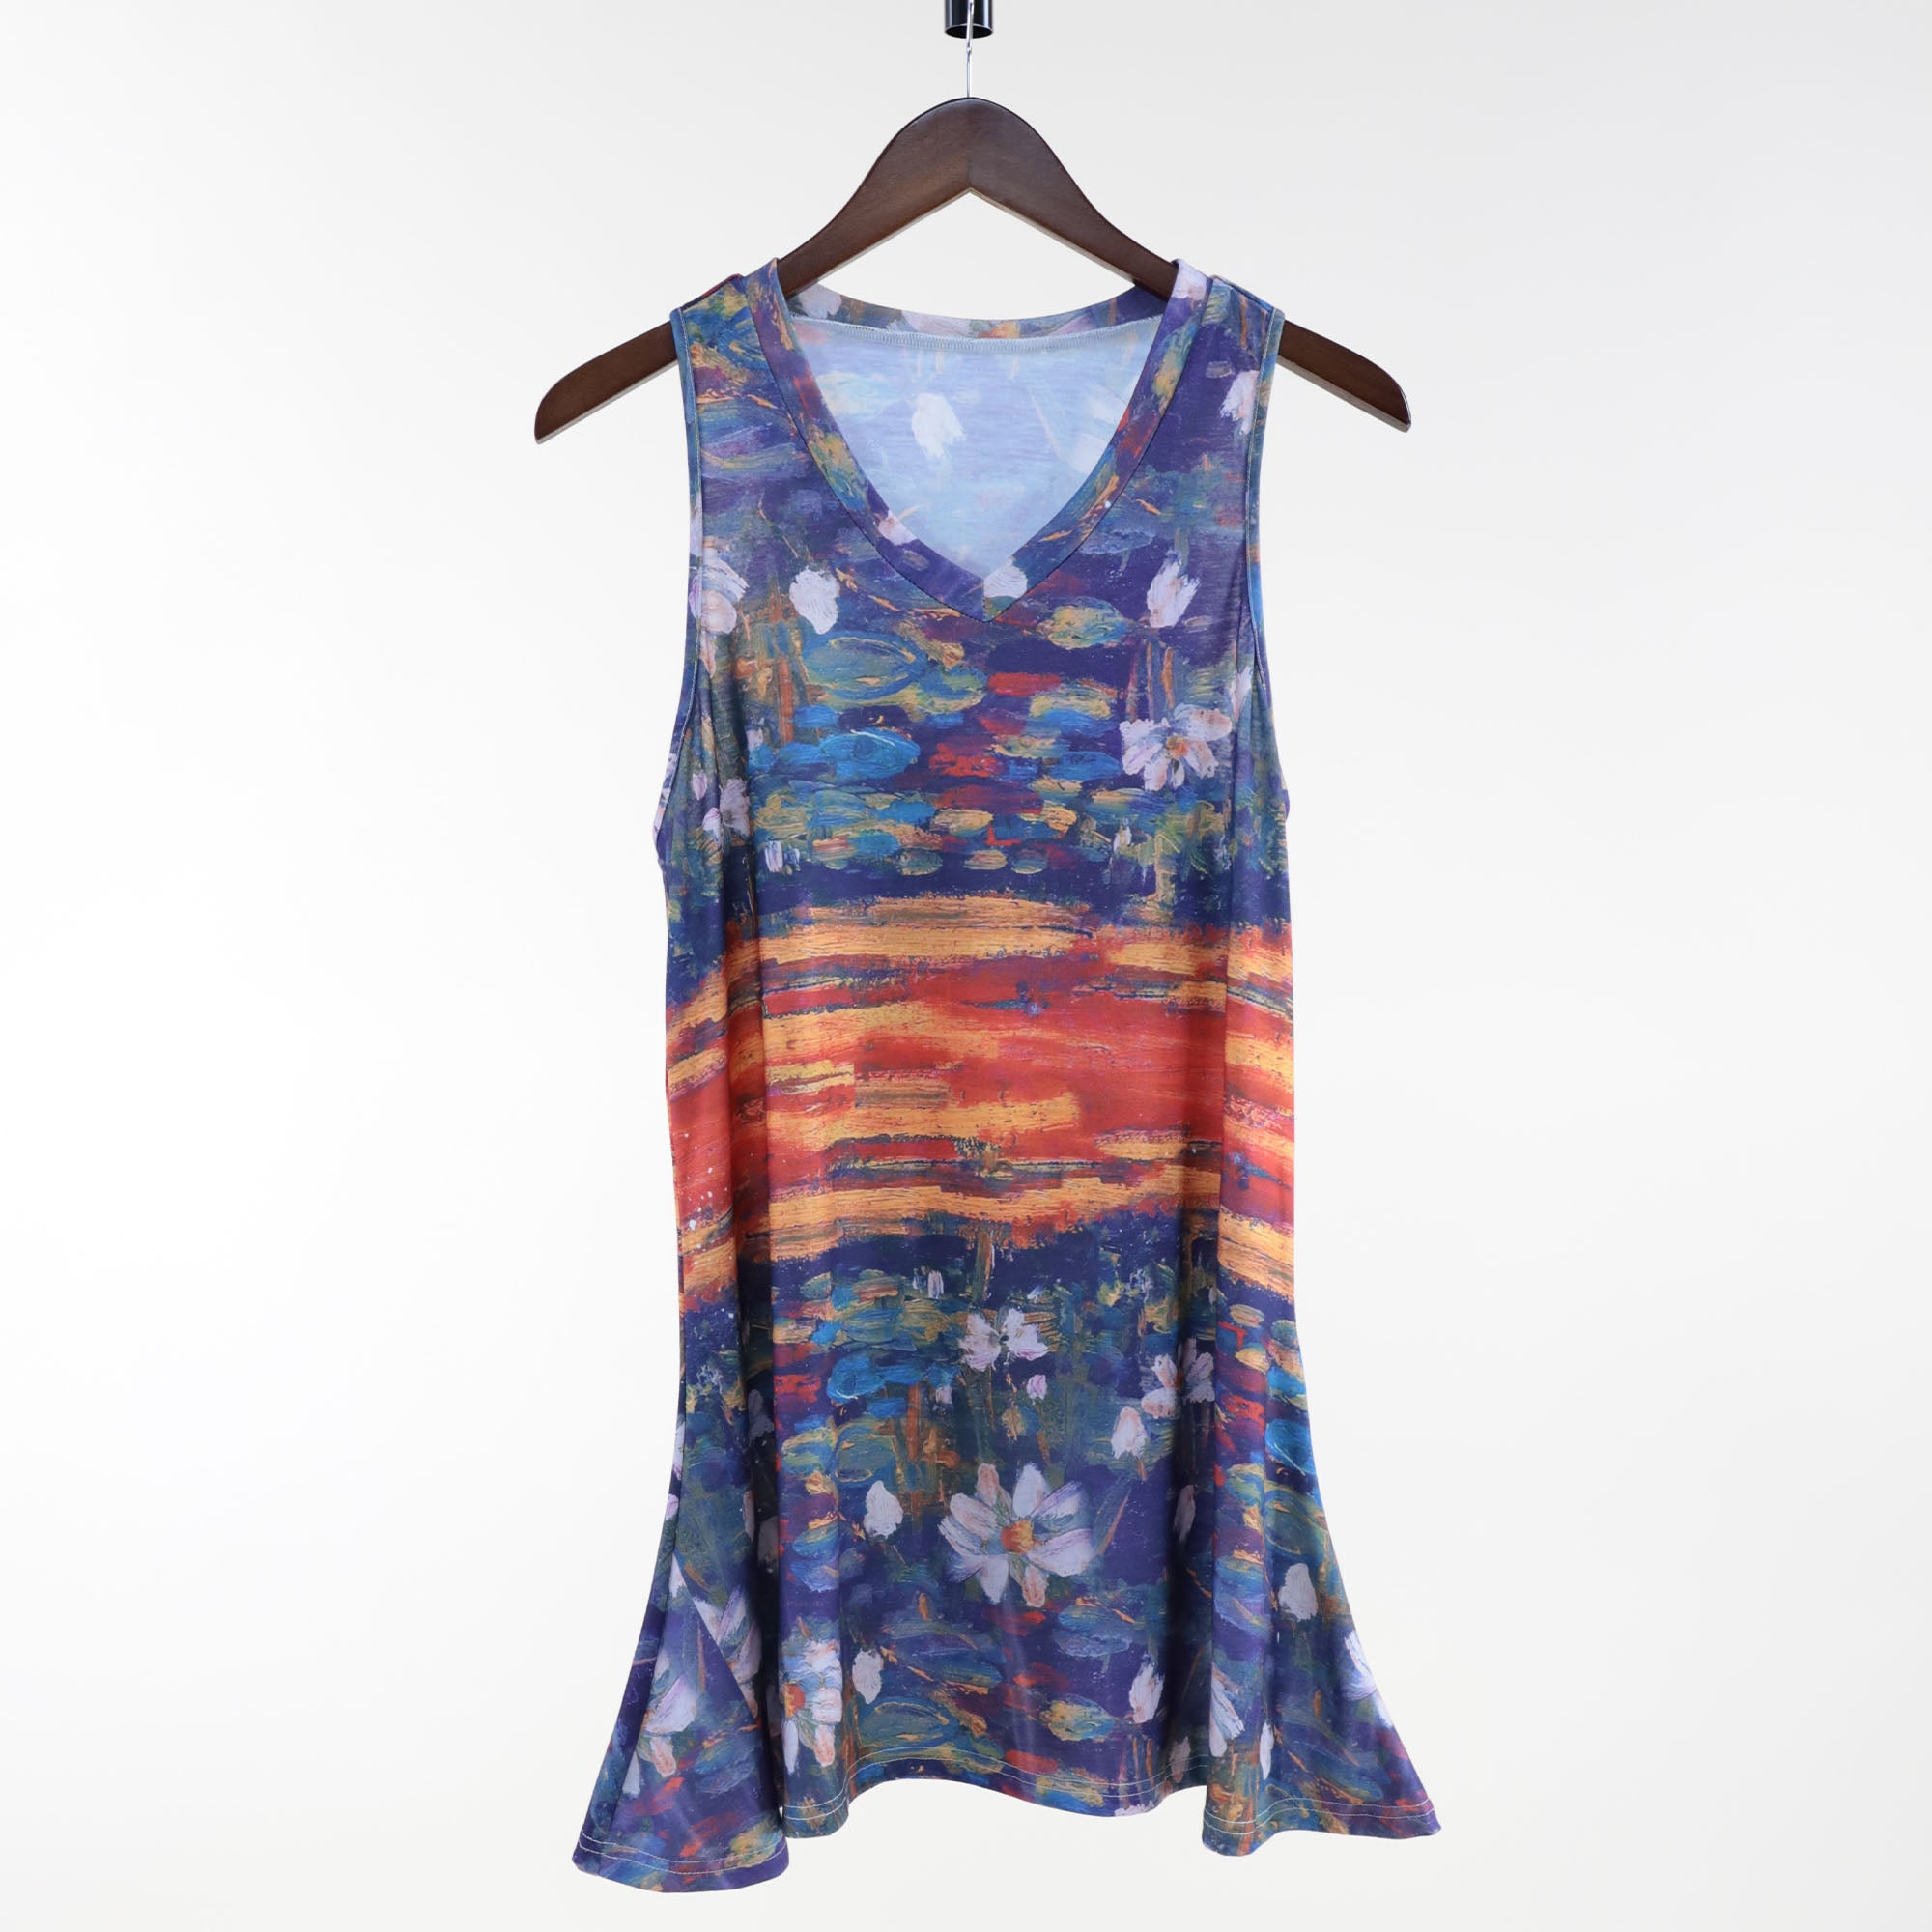 Museum Collection Van Gogh Sleeveless Tunic Dress - Water Sunset - S/M